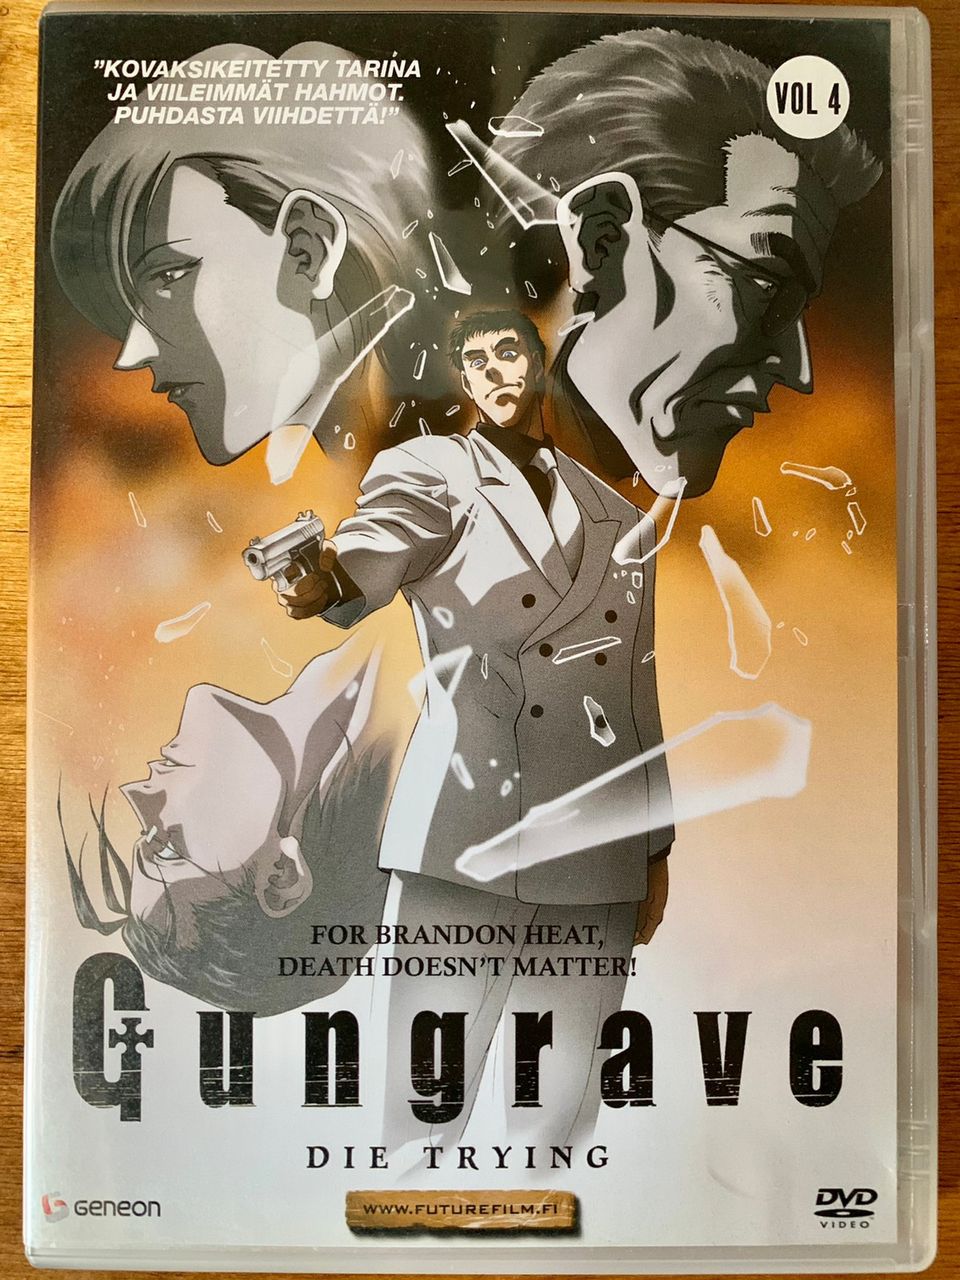 Gungrave vol. 4 Die trying DVD anime